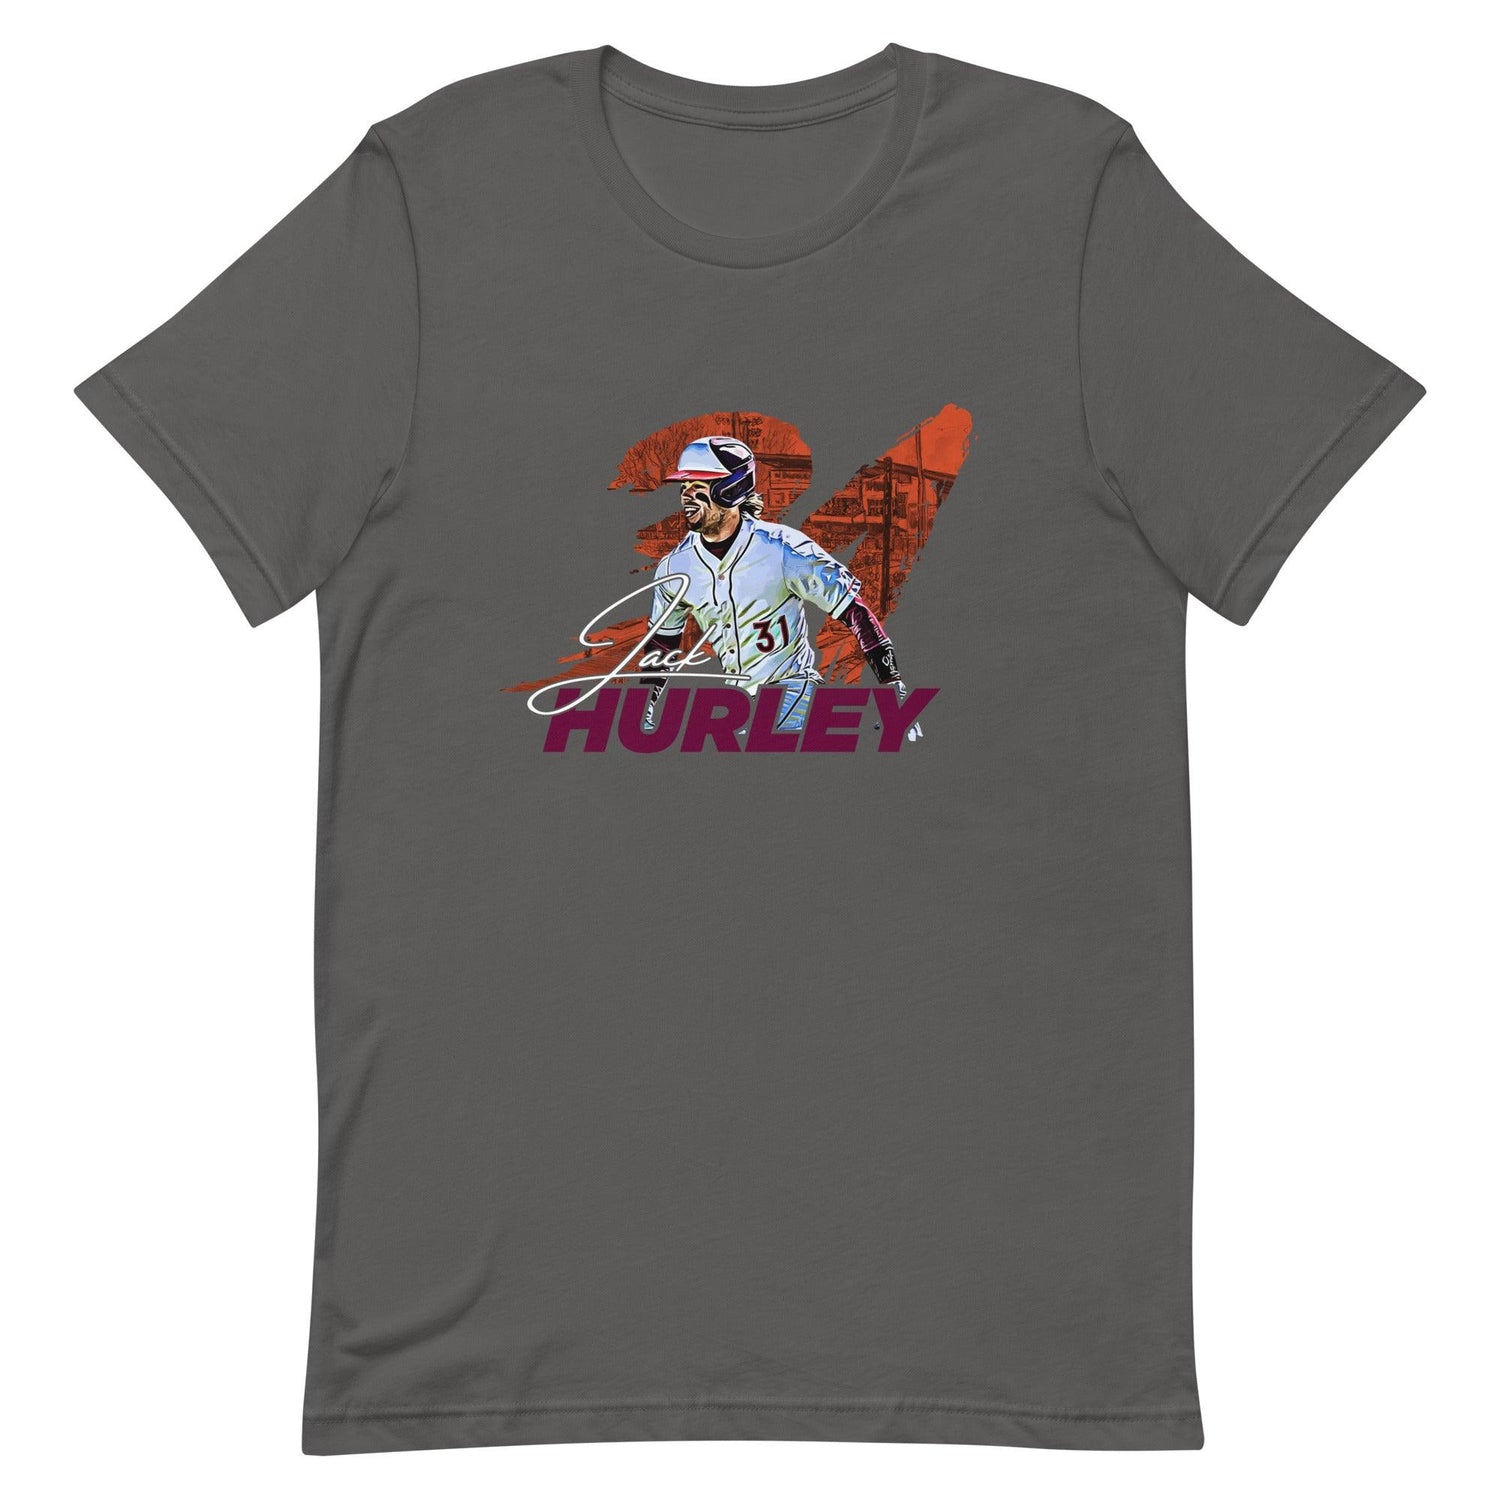 Jack Hurley “Essential” t-shirt - Fan Arch